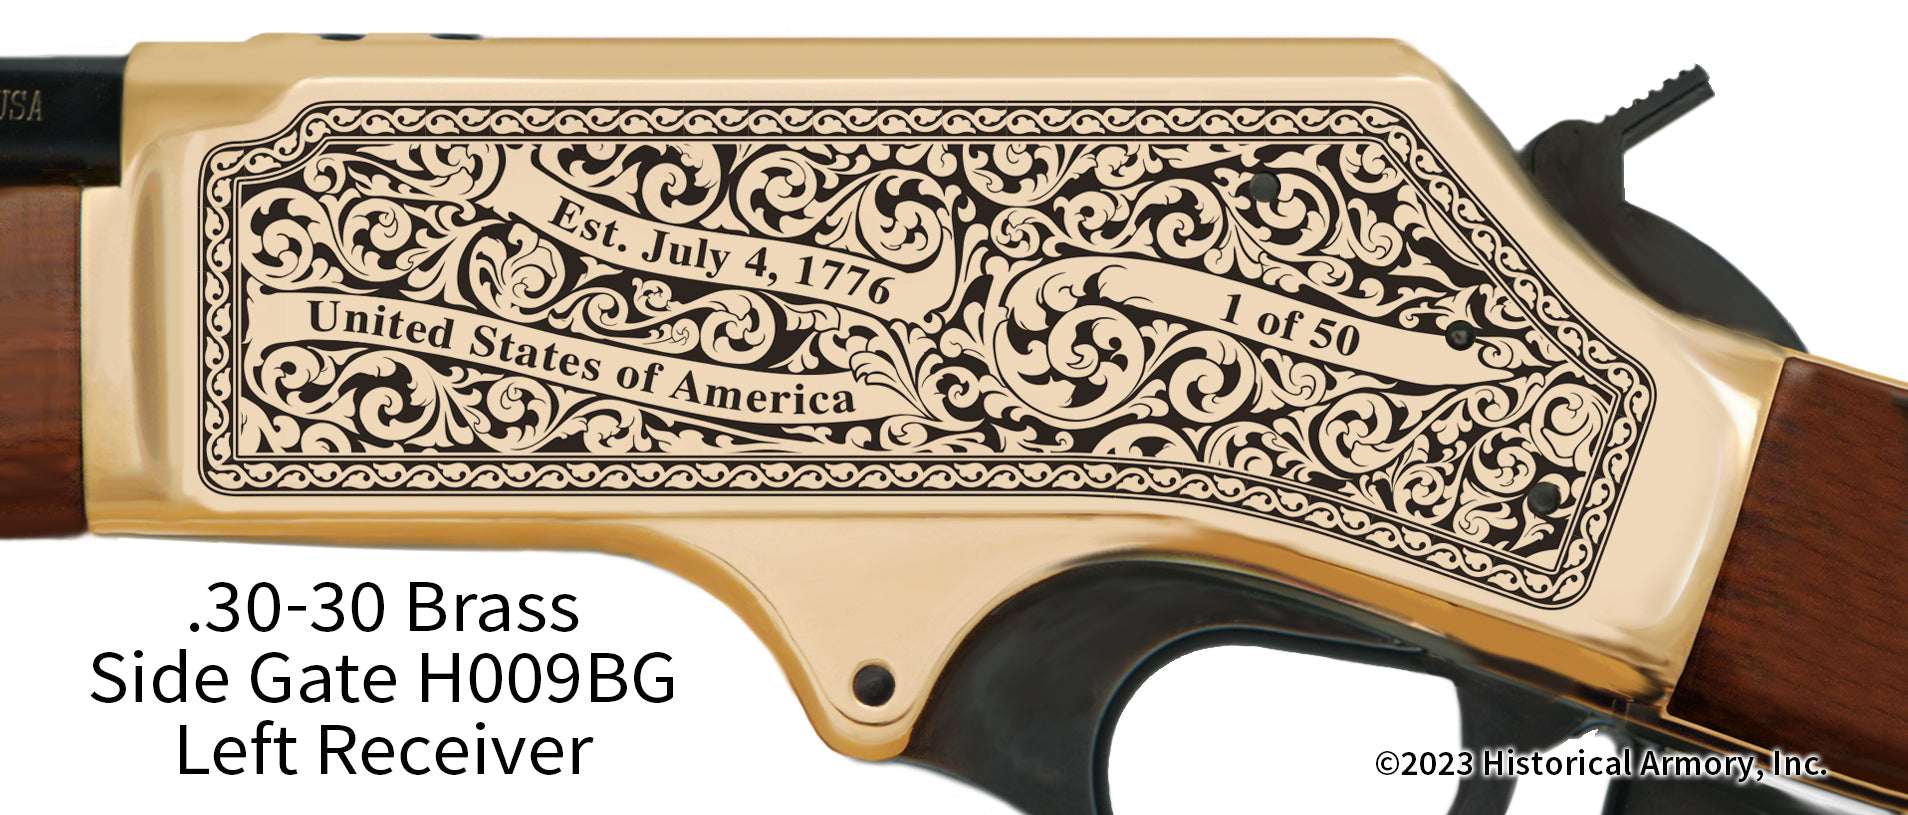 Chemung County New York Engraved Henry .30-30 Brass Side Gate Rifle